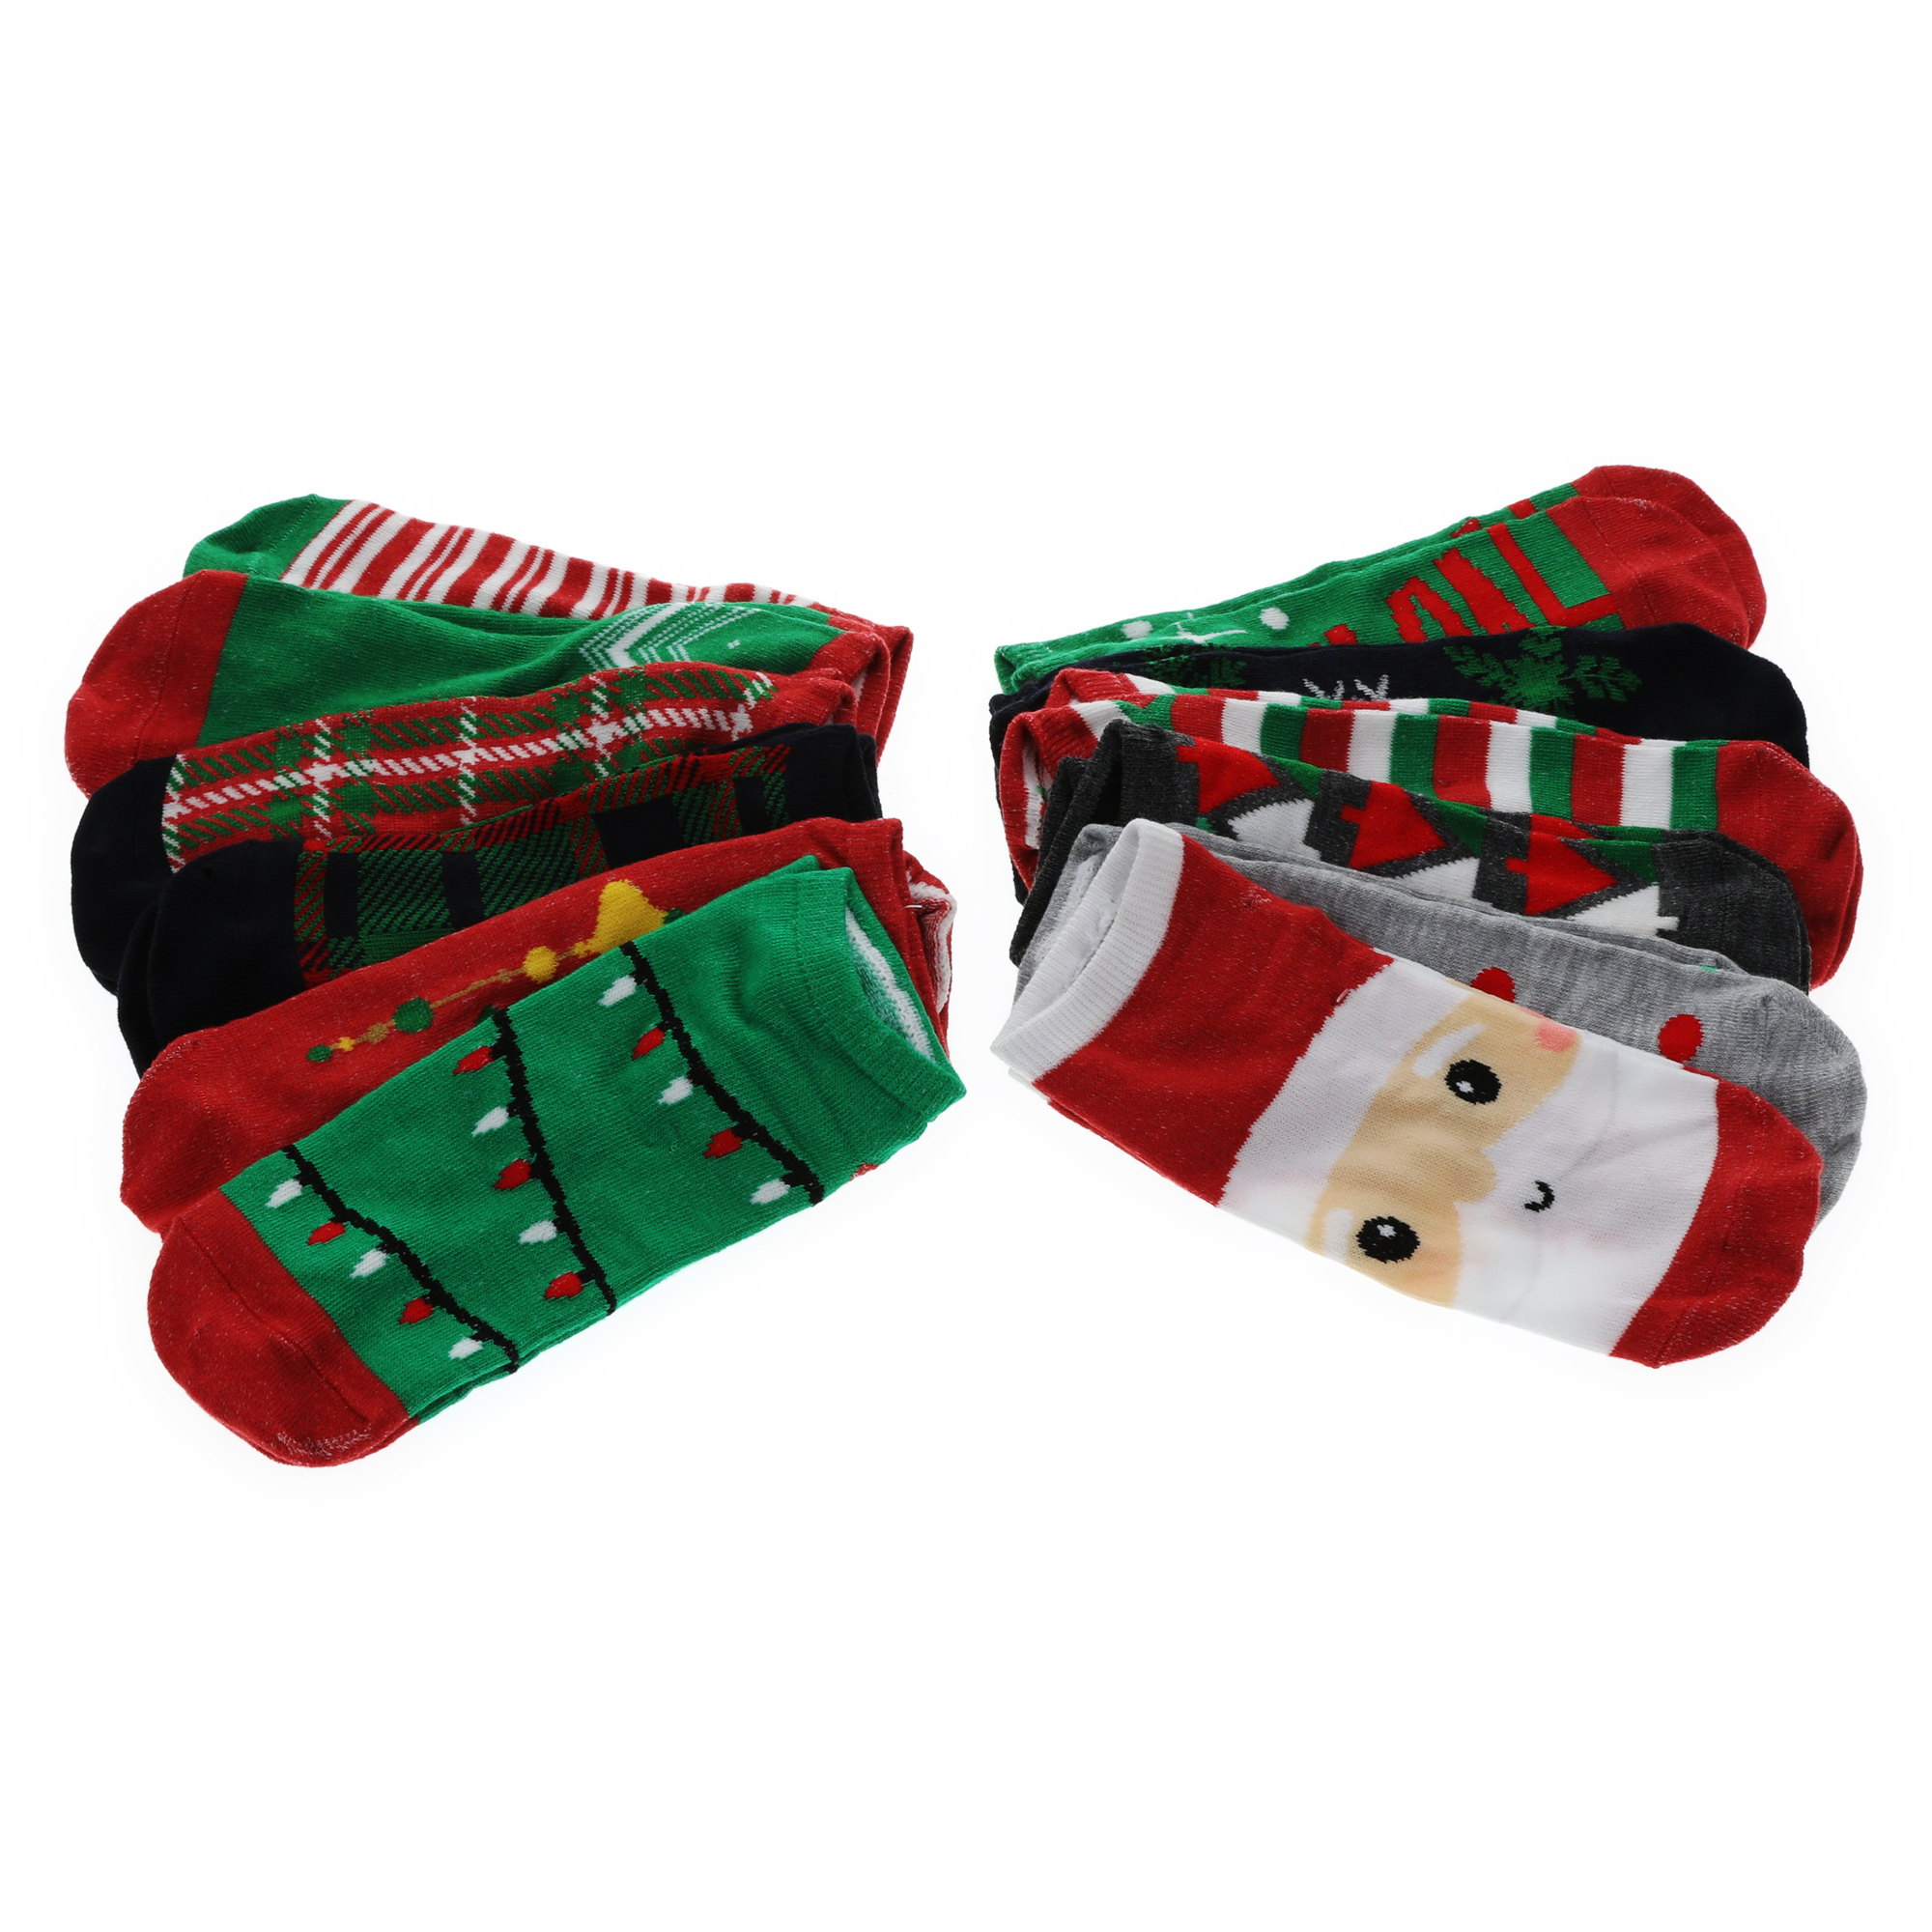 12 days of christmas surprise socks countdown calendar -red & green